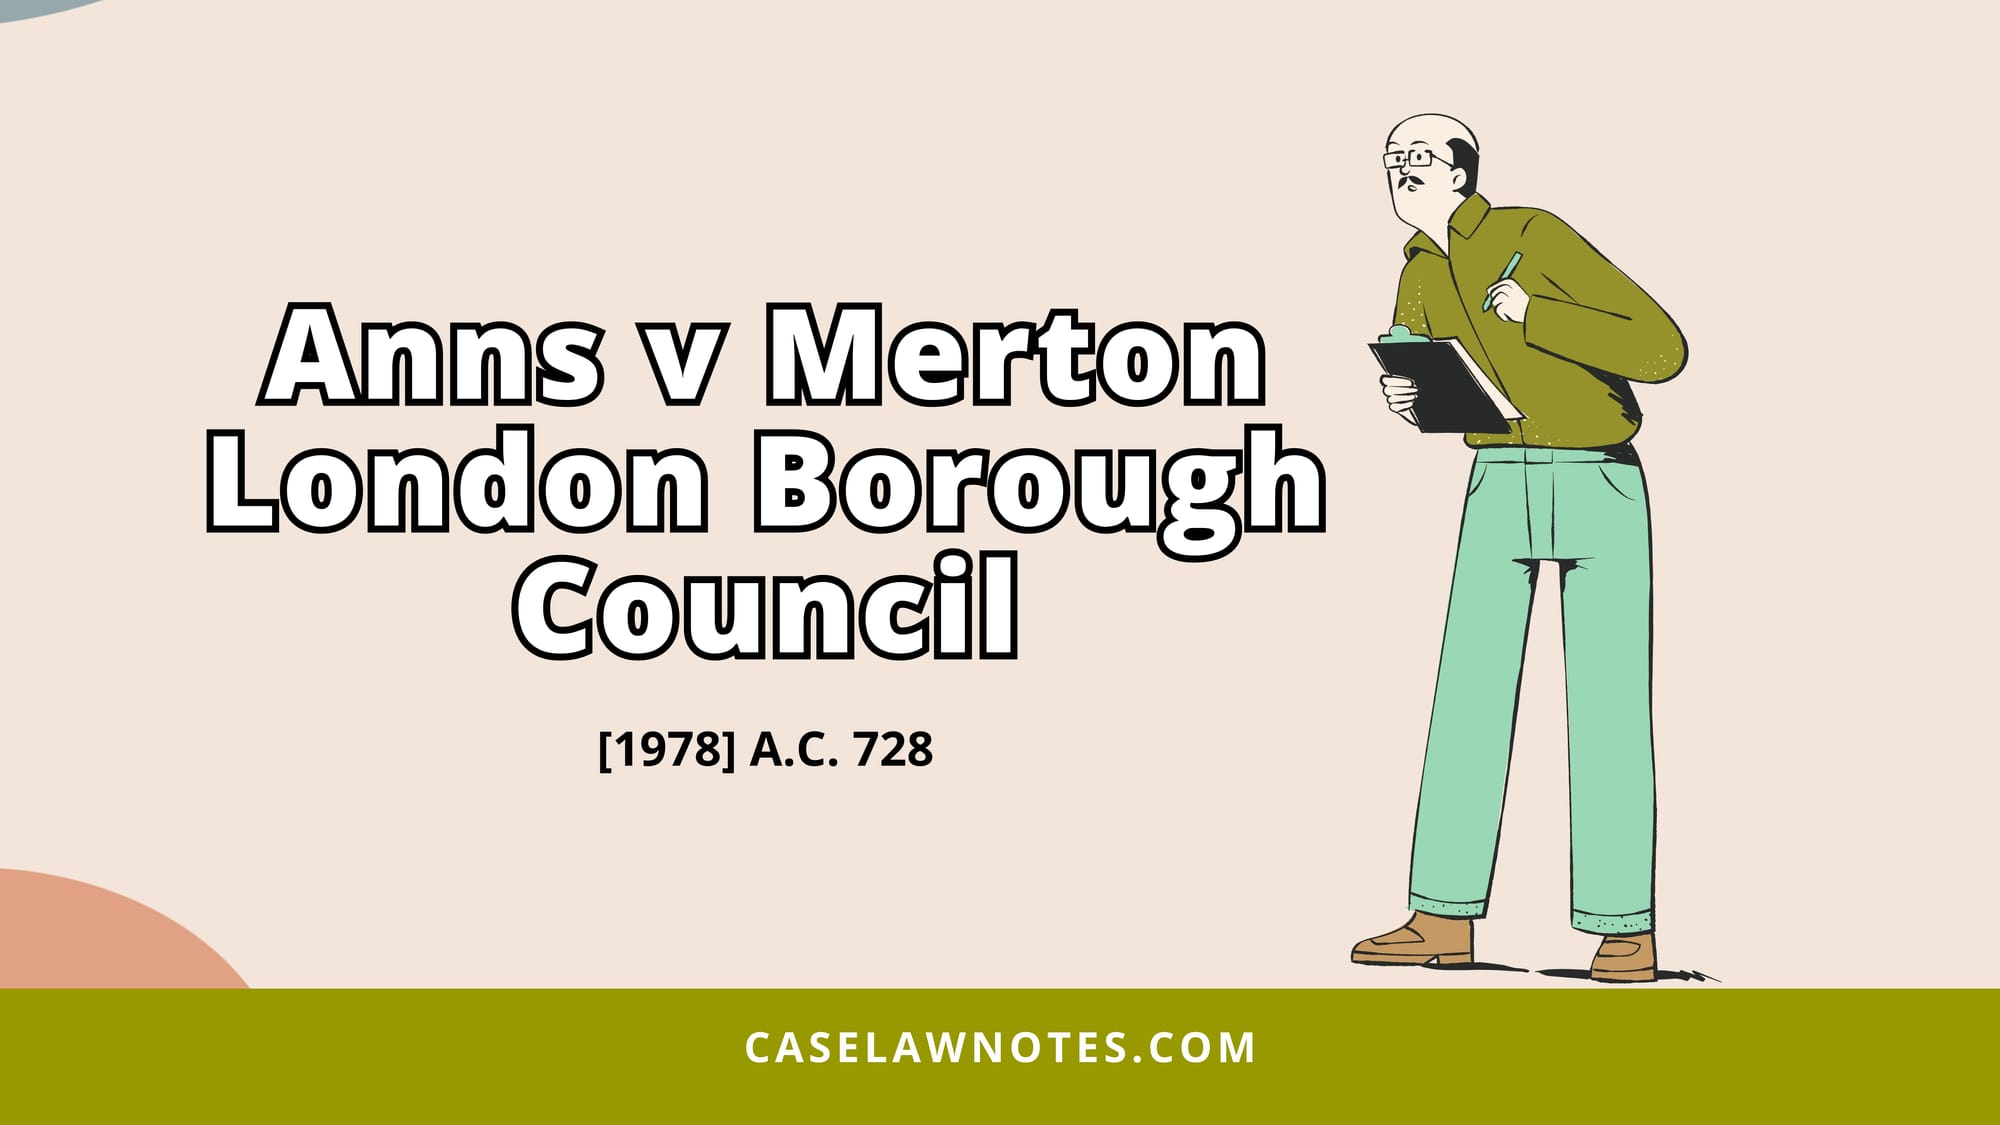 Anns v Merton London Borough Council - case analysis - tort - building inspection - duty of care 1